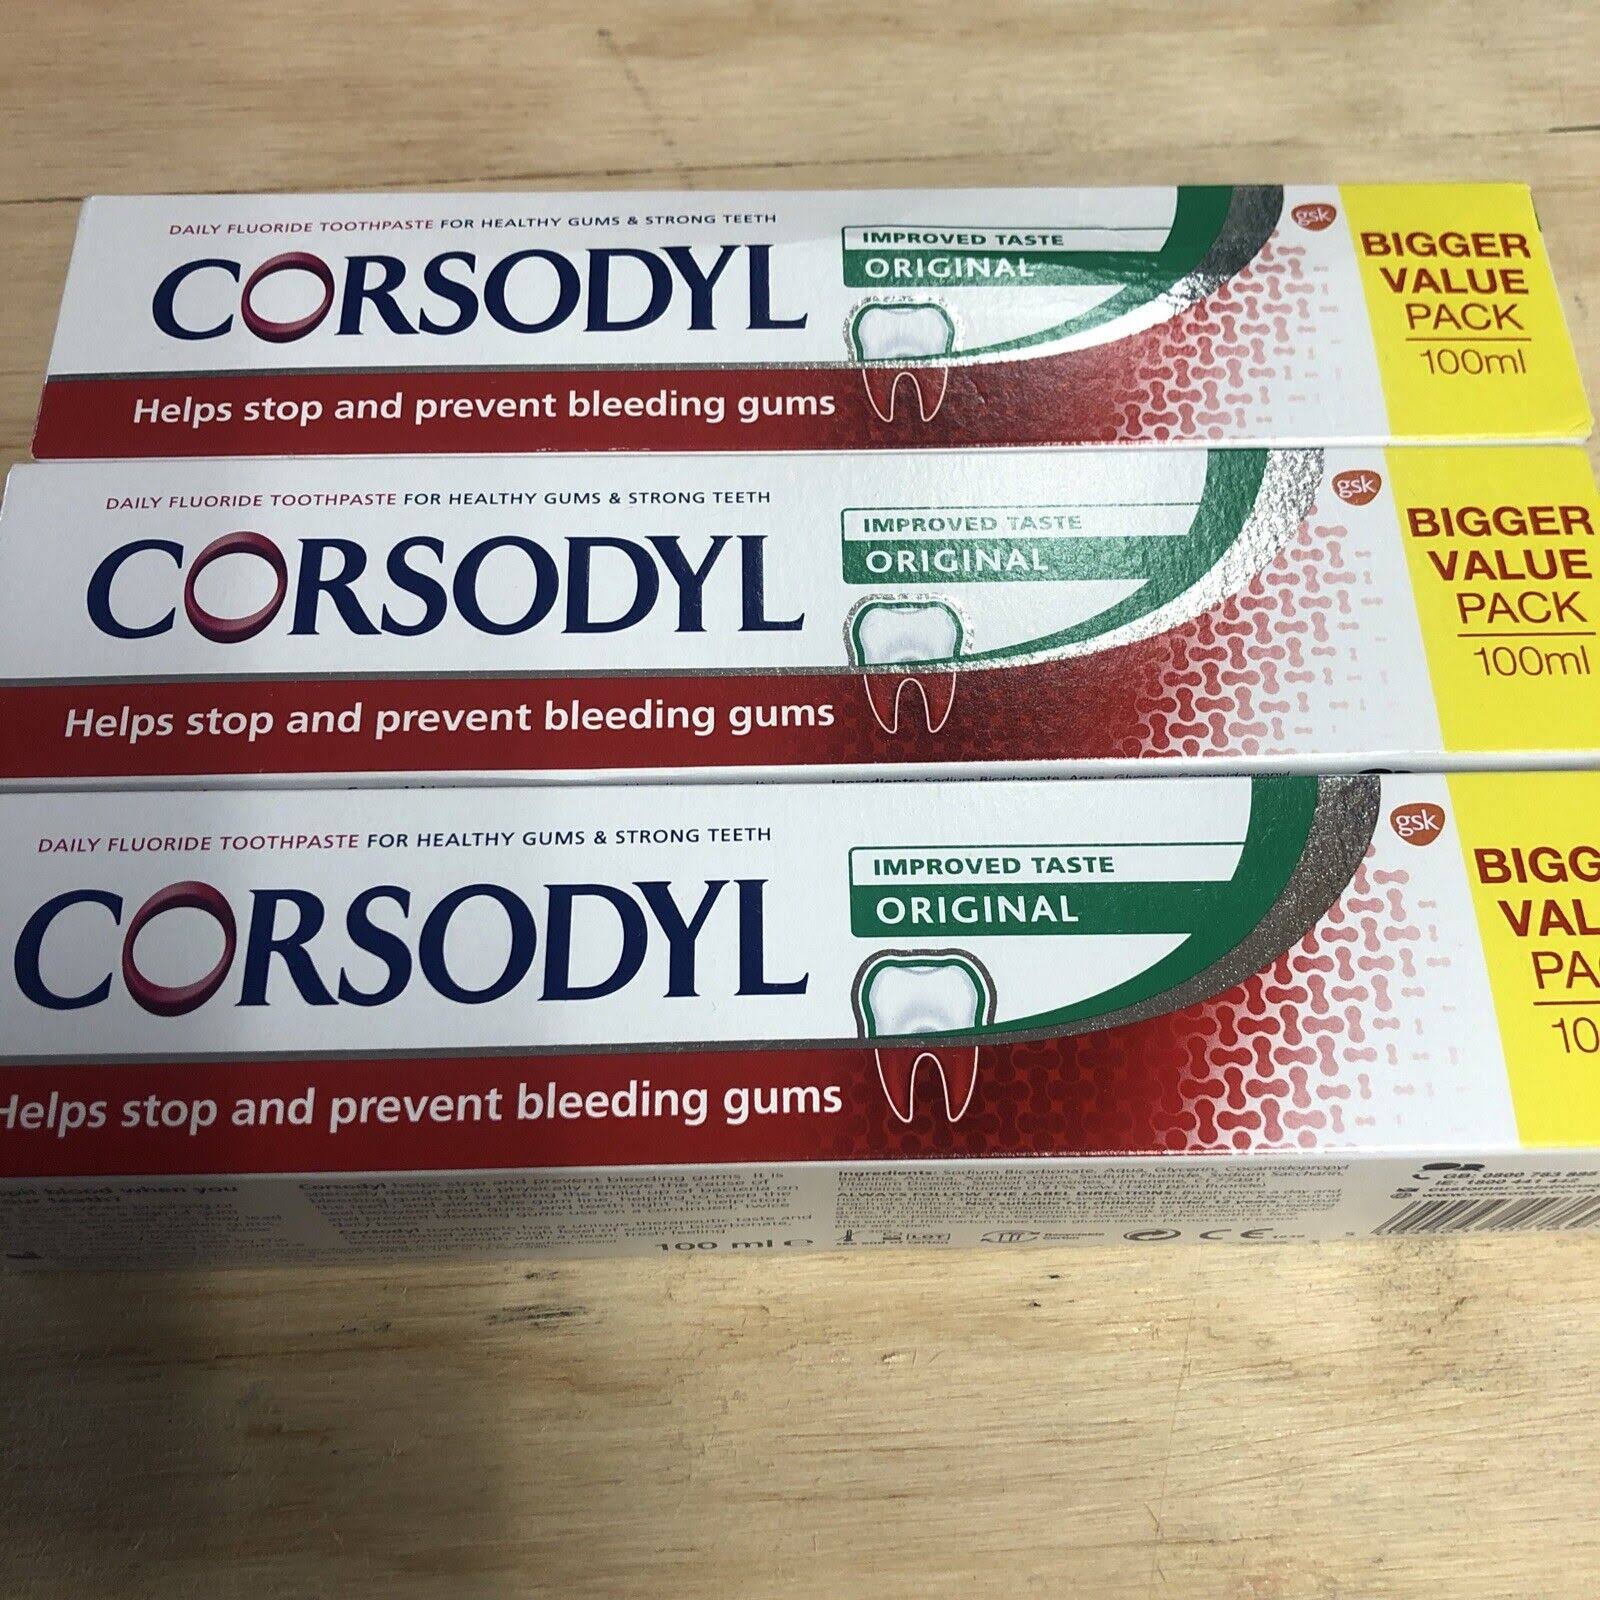 Corsodyl Daily Original Toothpaste Bigger Value Pack 100ml X3